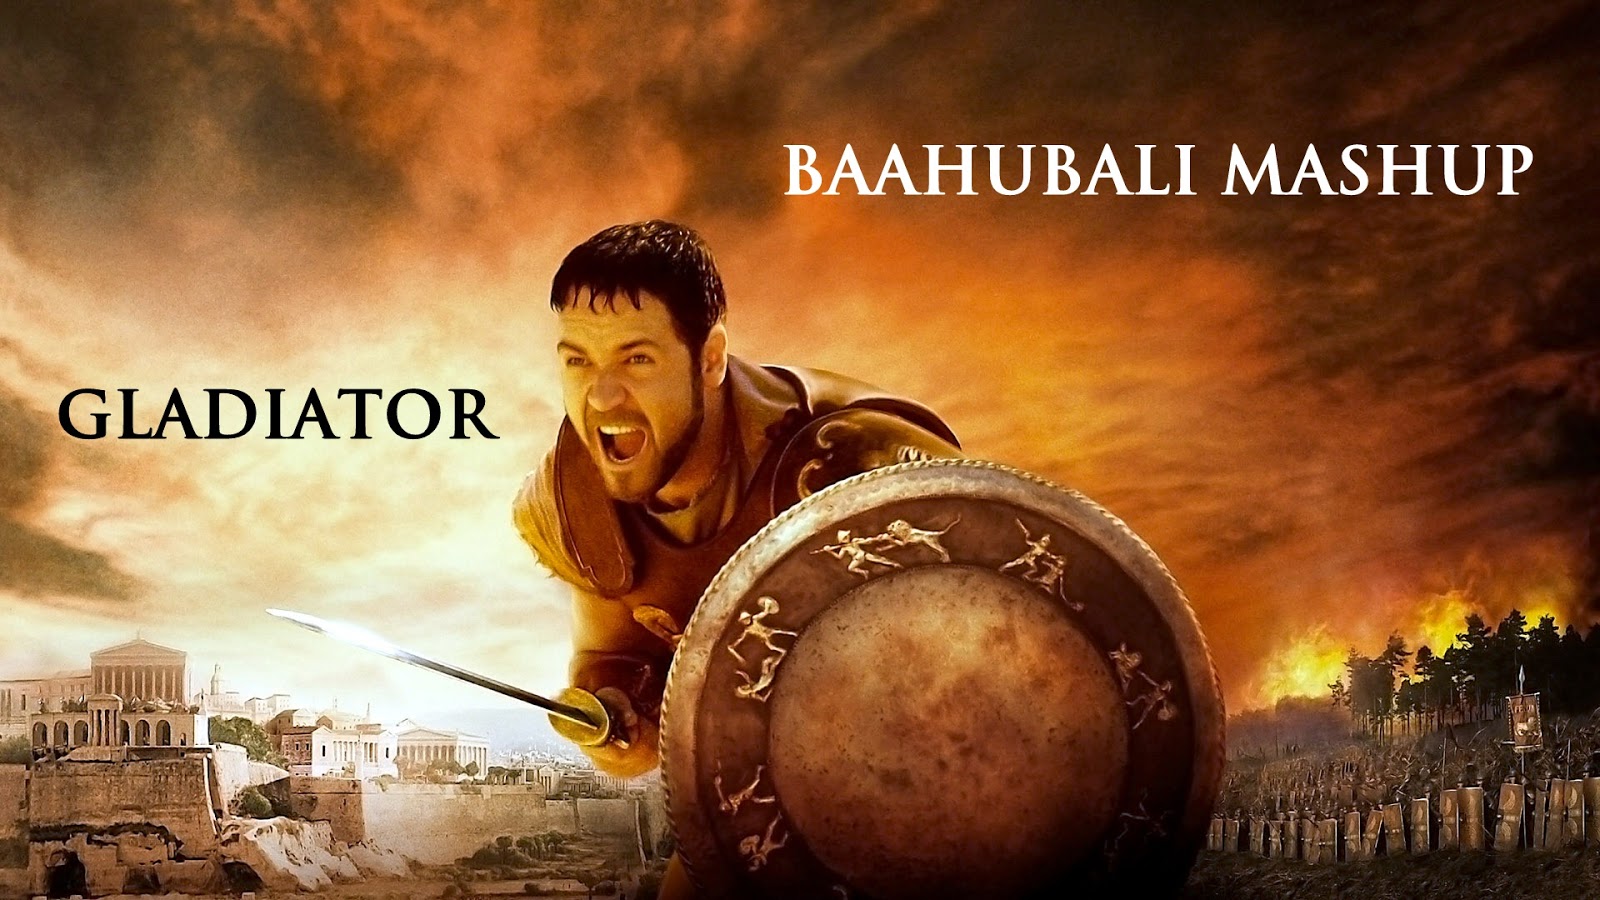 bahubali 2 full movie download in hindi hd free download